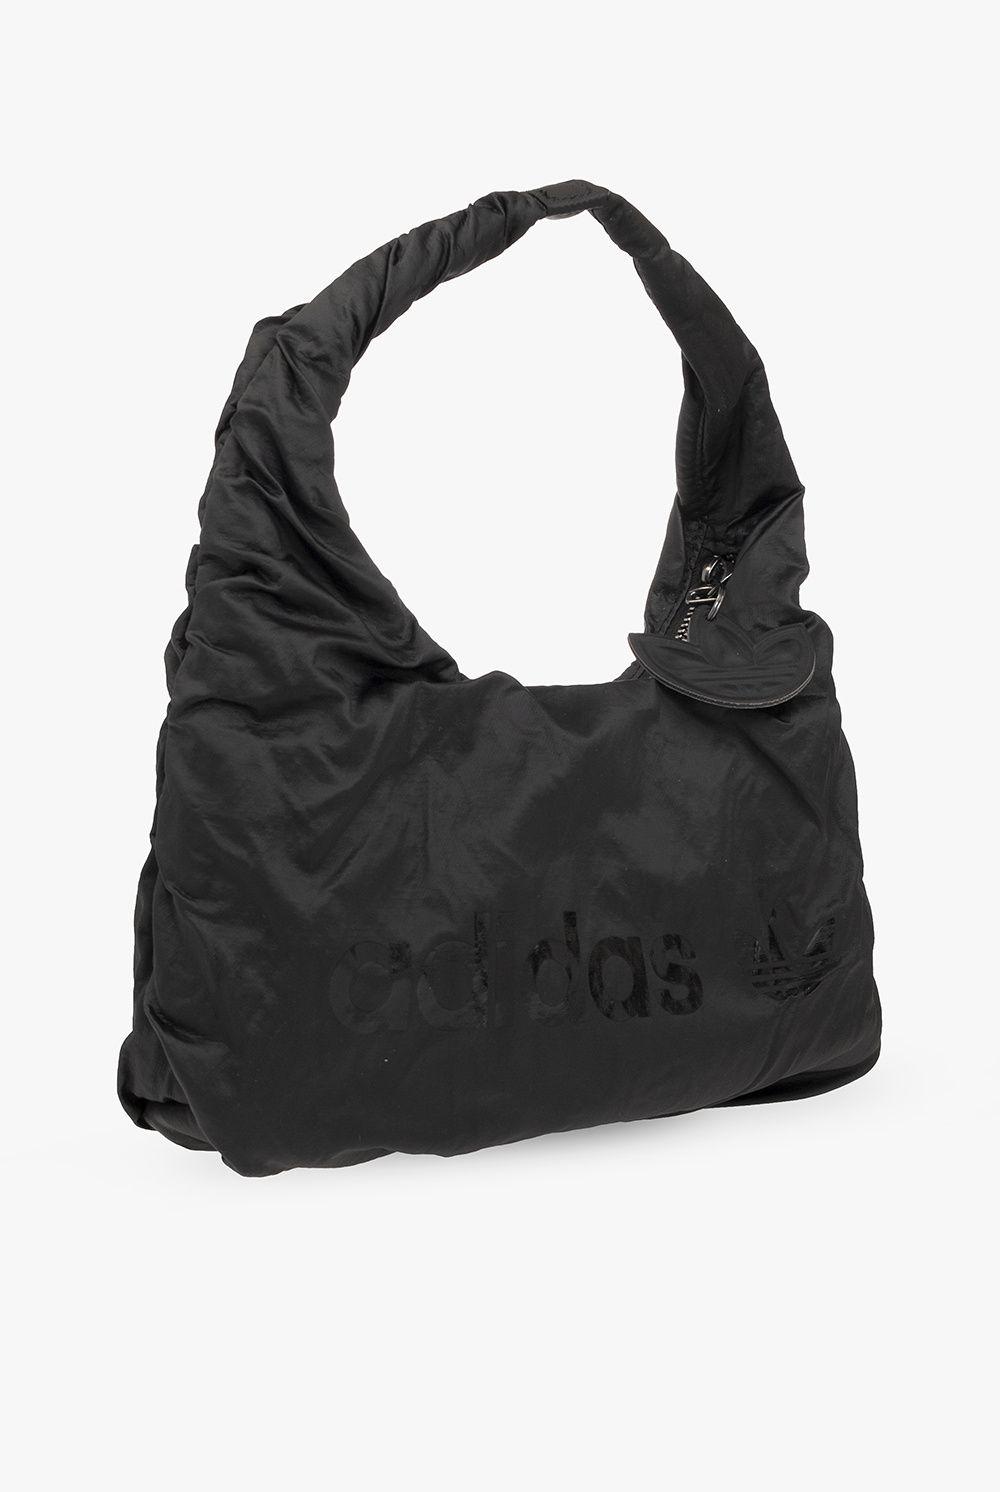 adidas Originals Hobo Bag in Black | Lyst